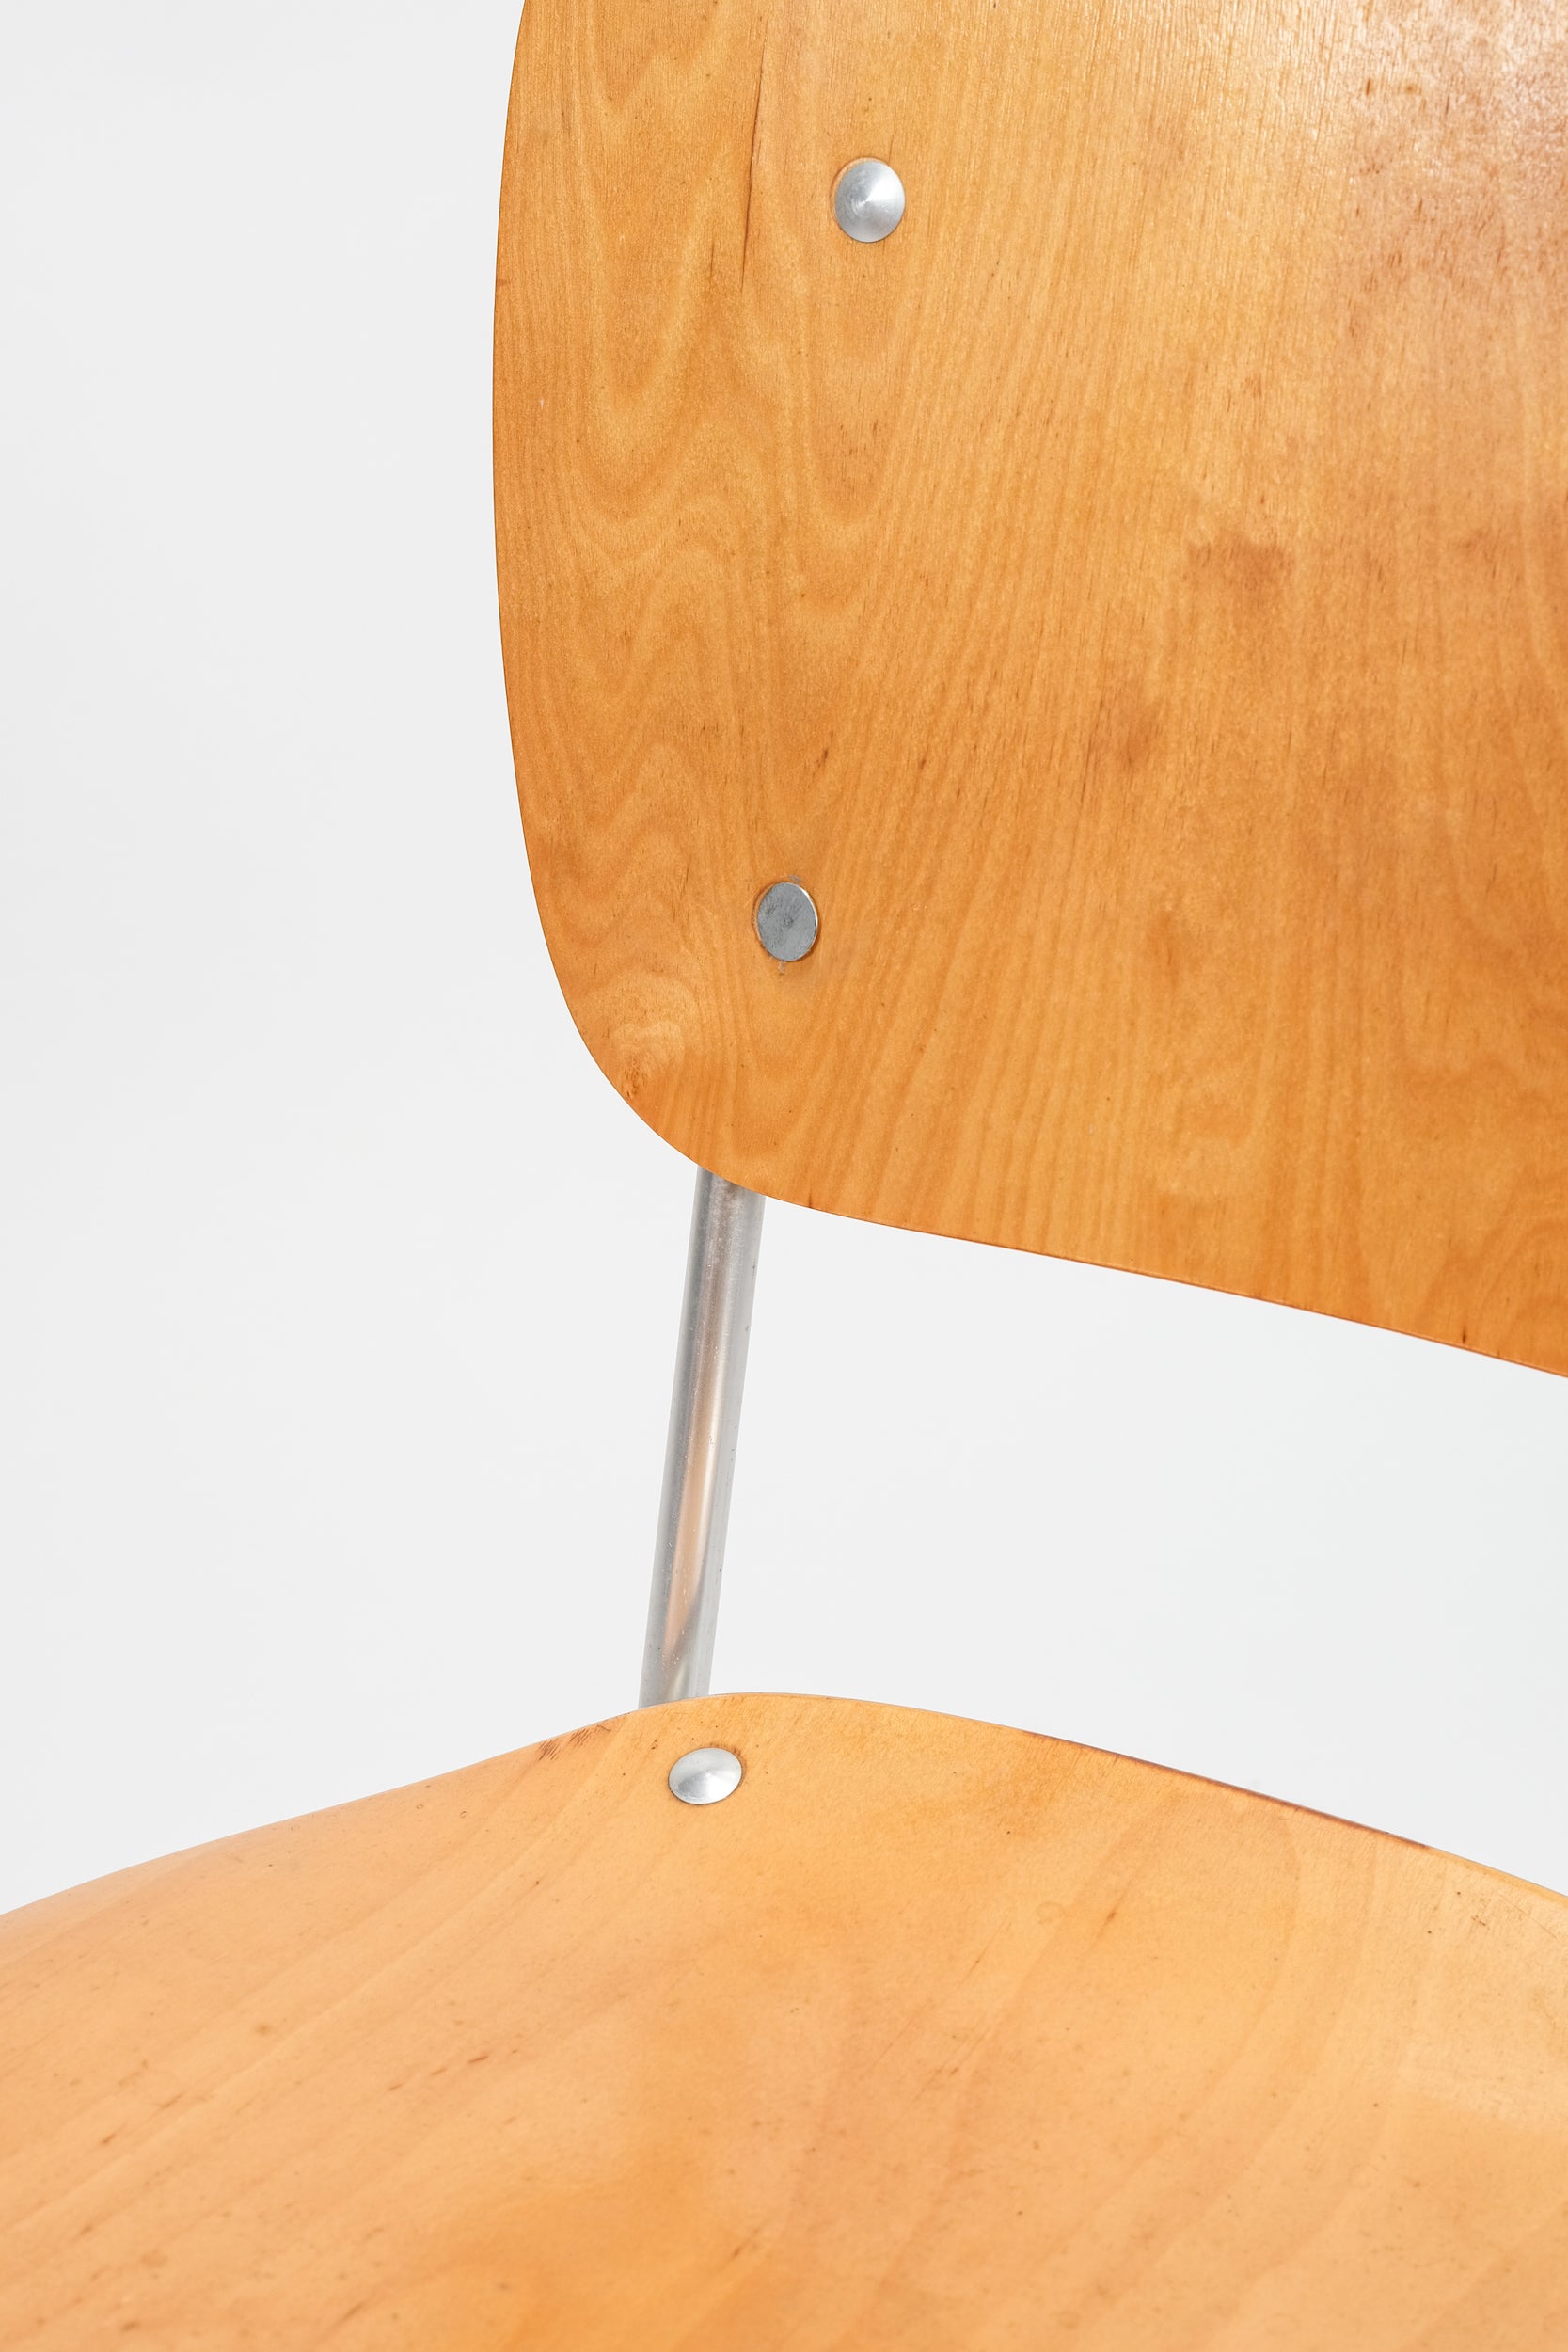 Armin Wirth, Aluminum-Flex folding chair, 50s